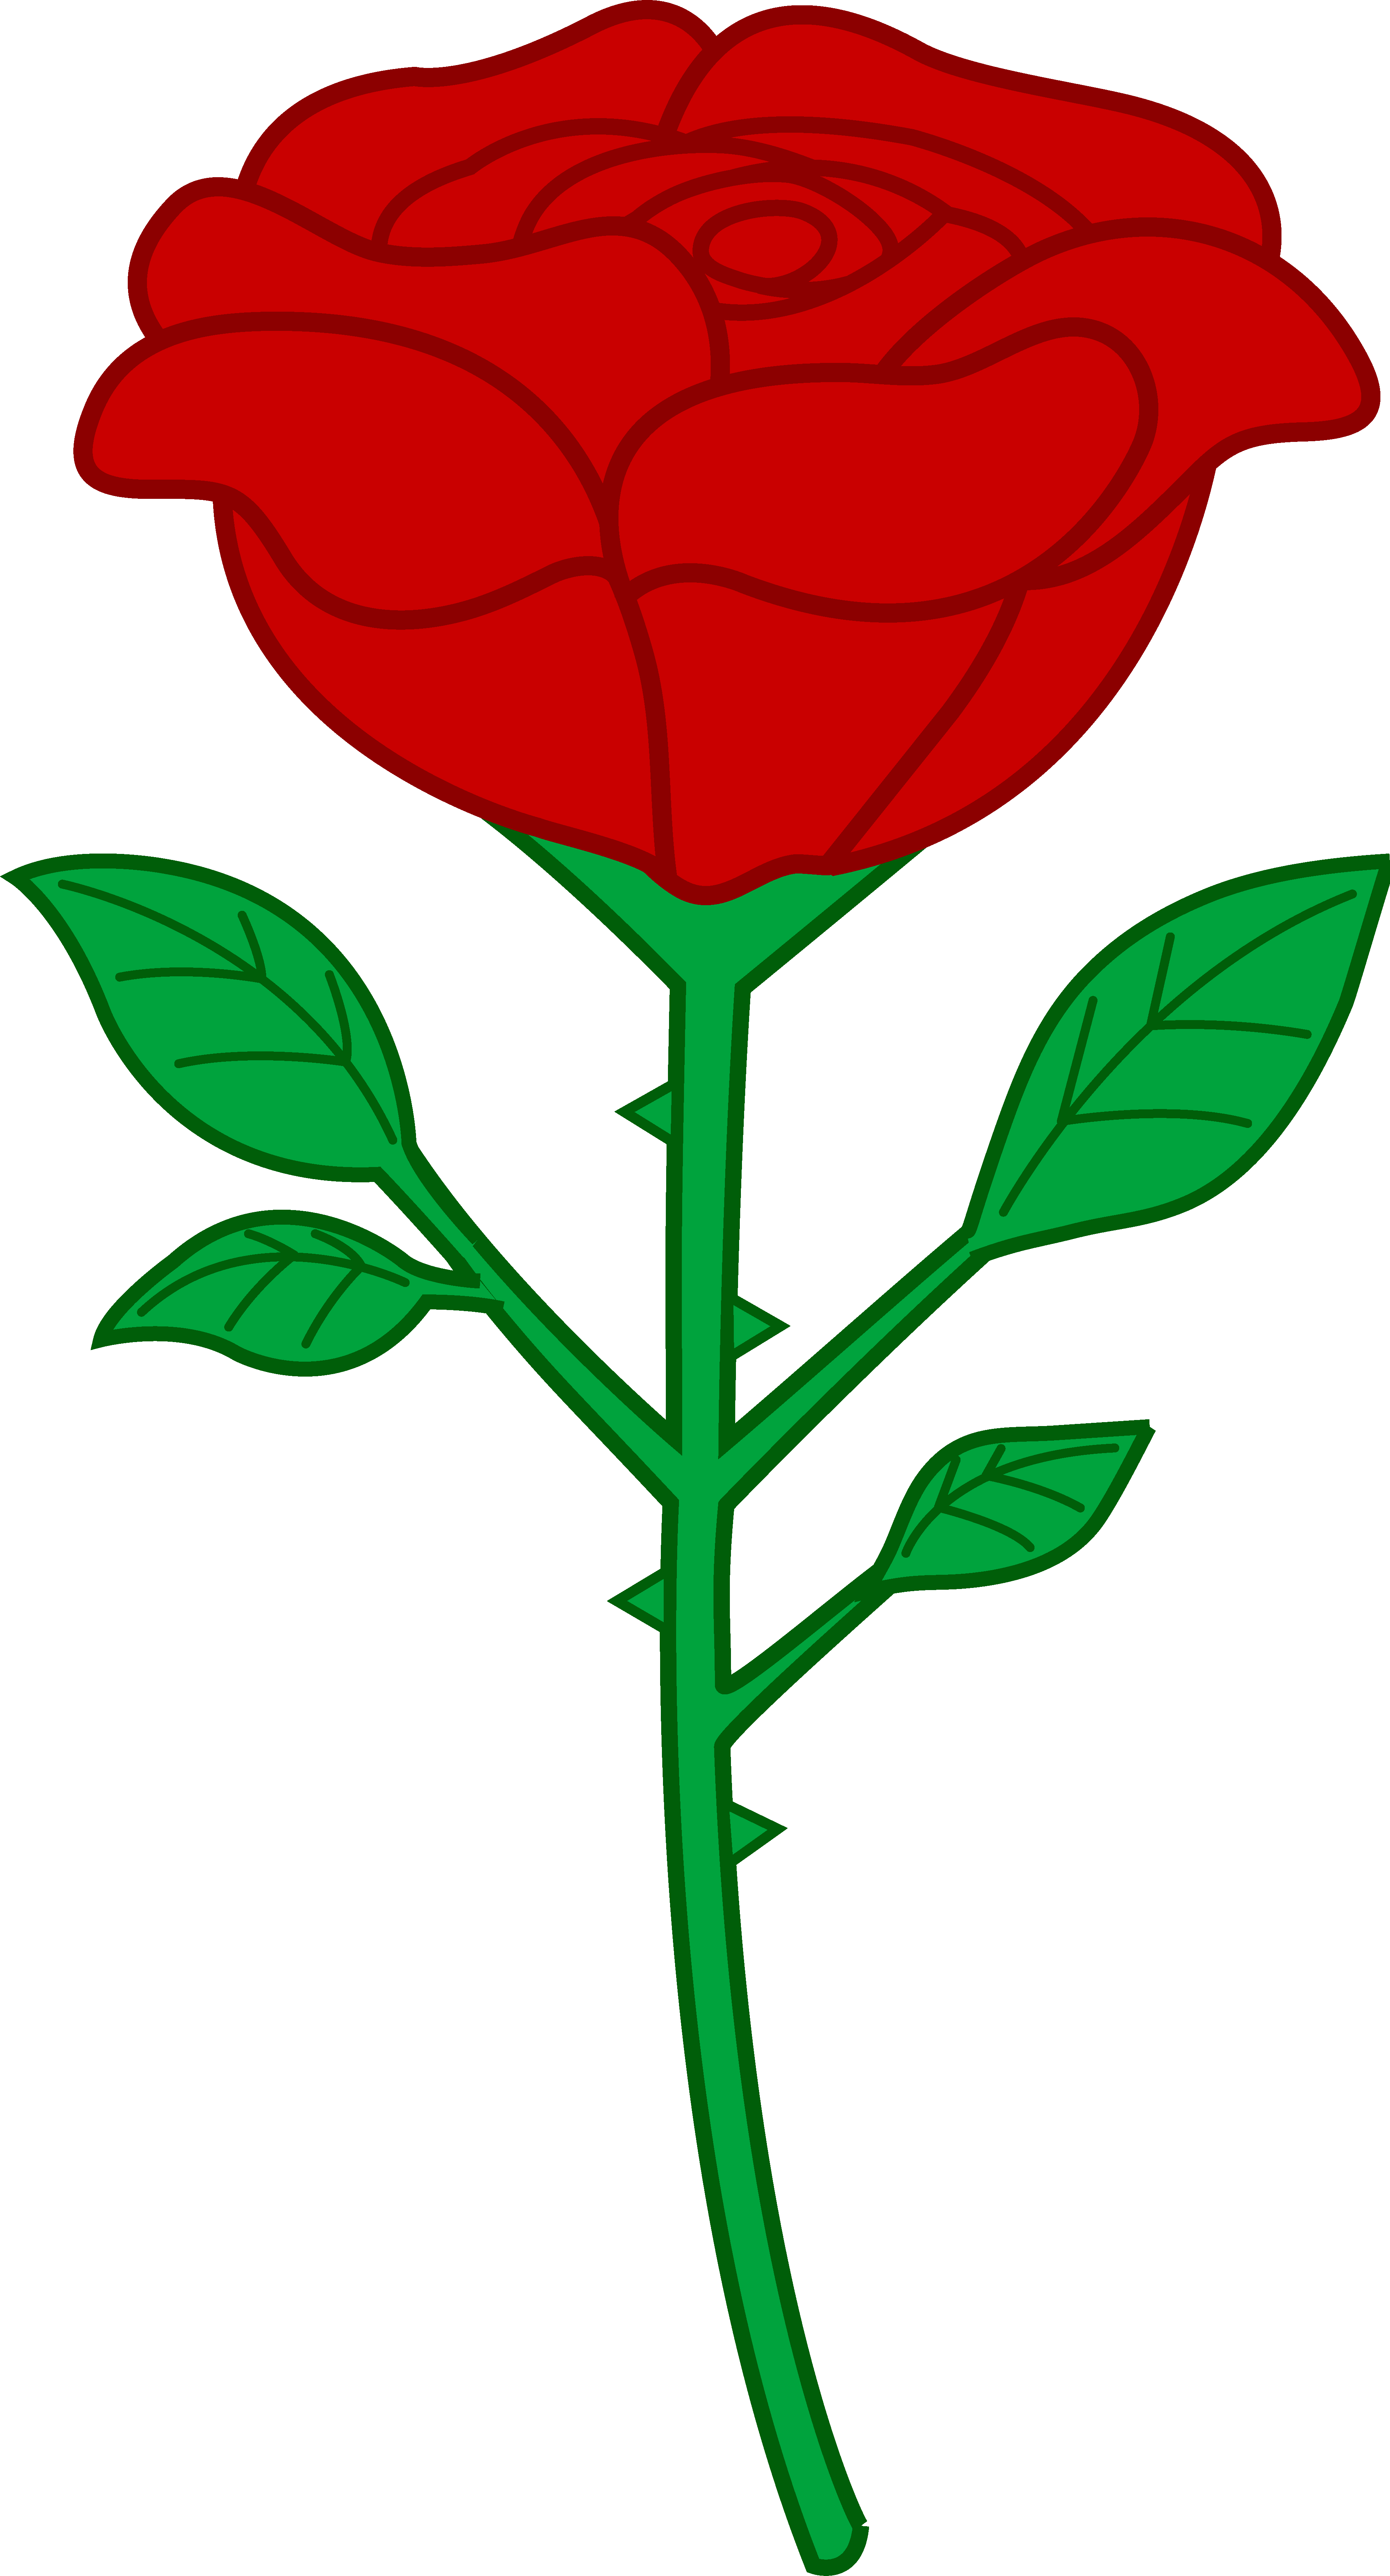 Single Red Rose Clip Art - Free Clip Art